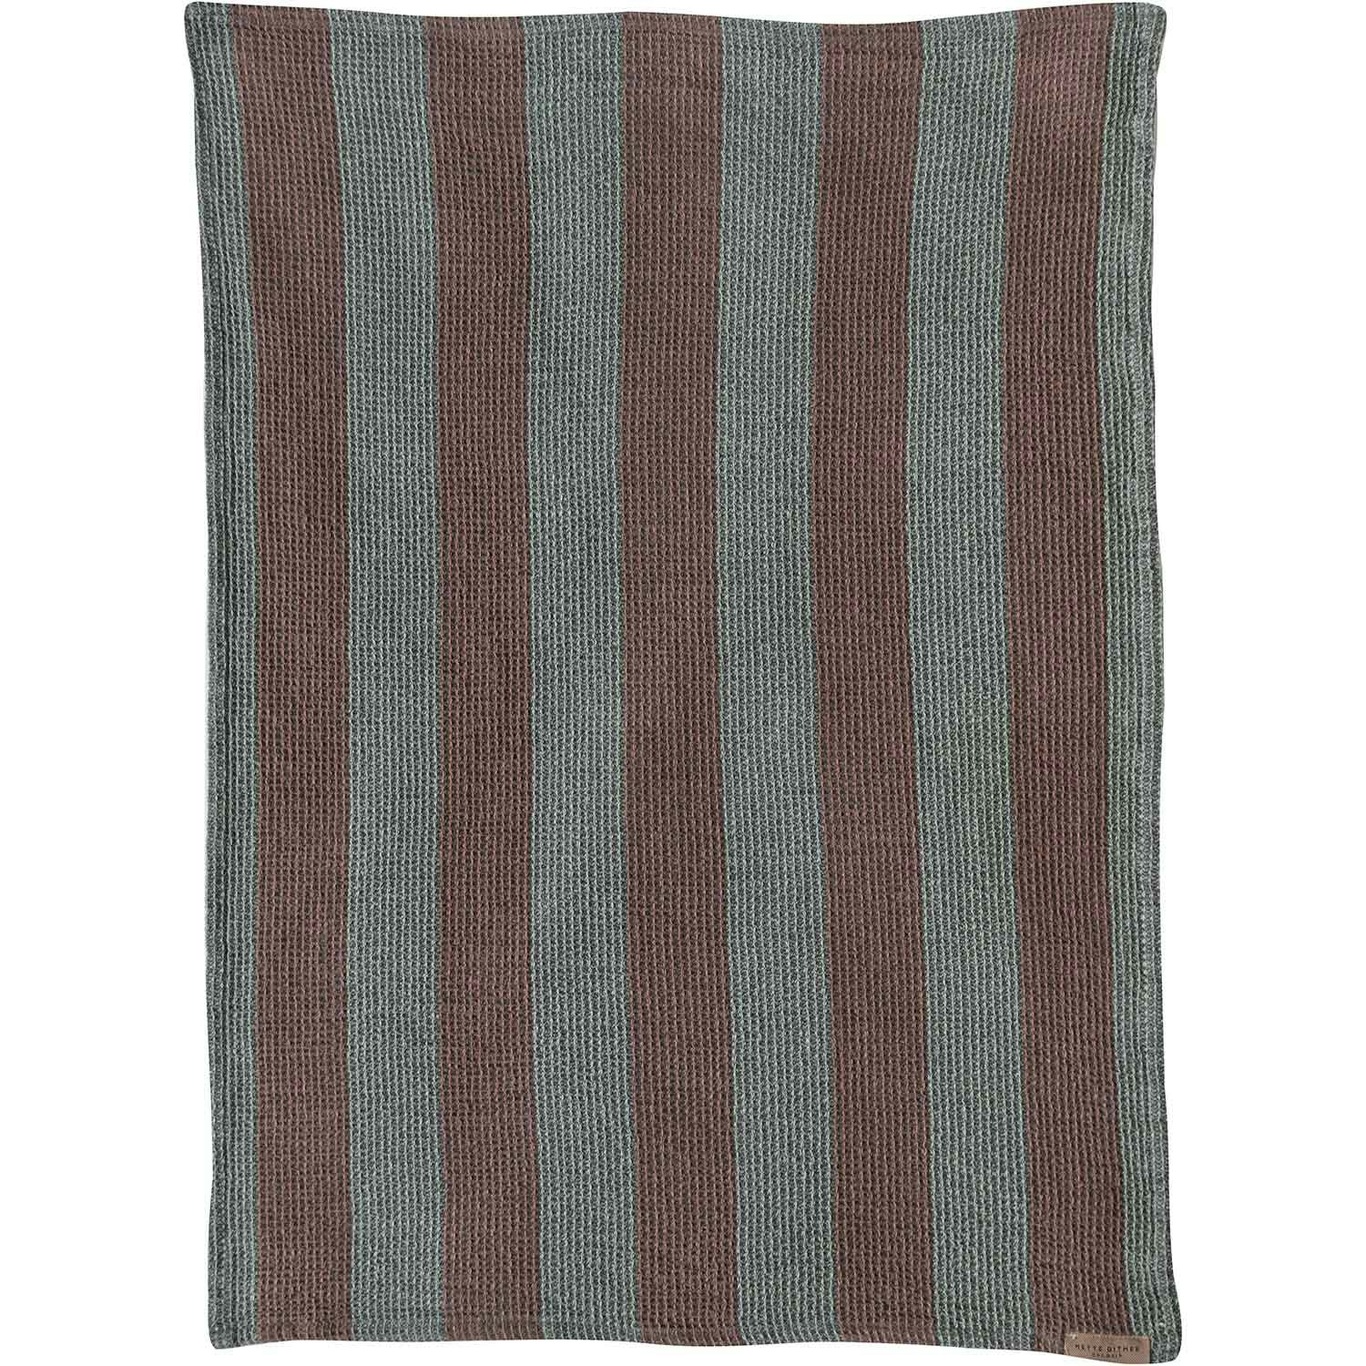 https://royaldesign.com/image/2/mette-ditmer-elvira-tea-towel-7?w=800&quality=80